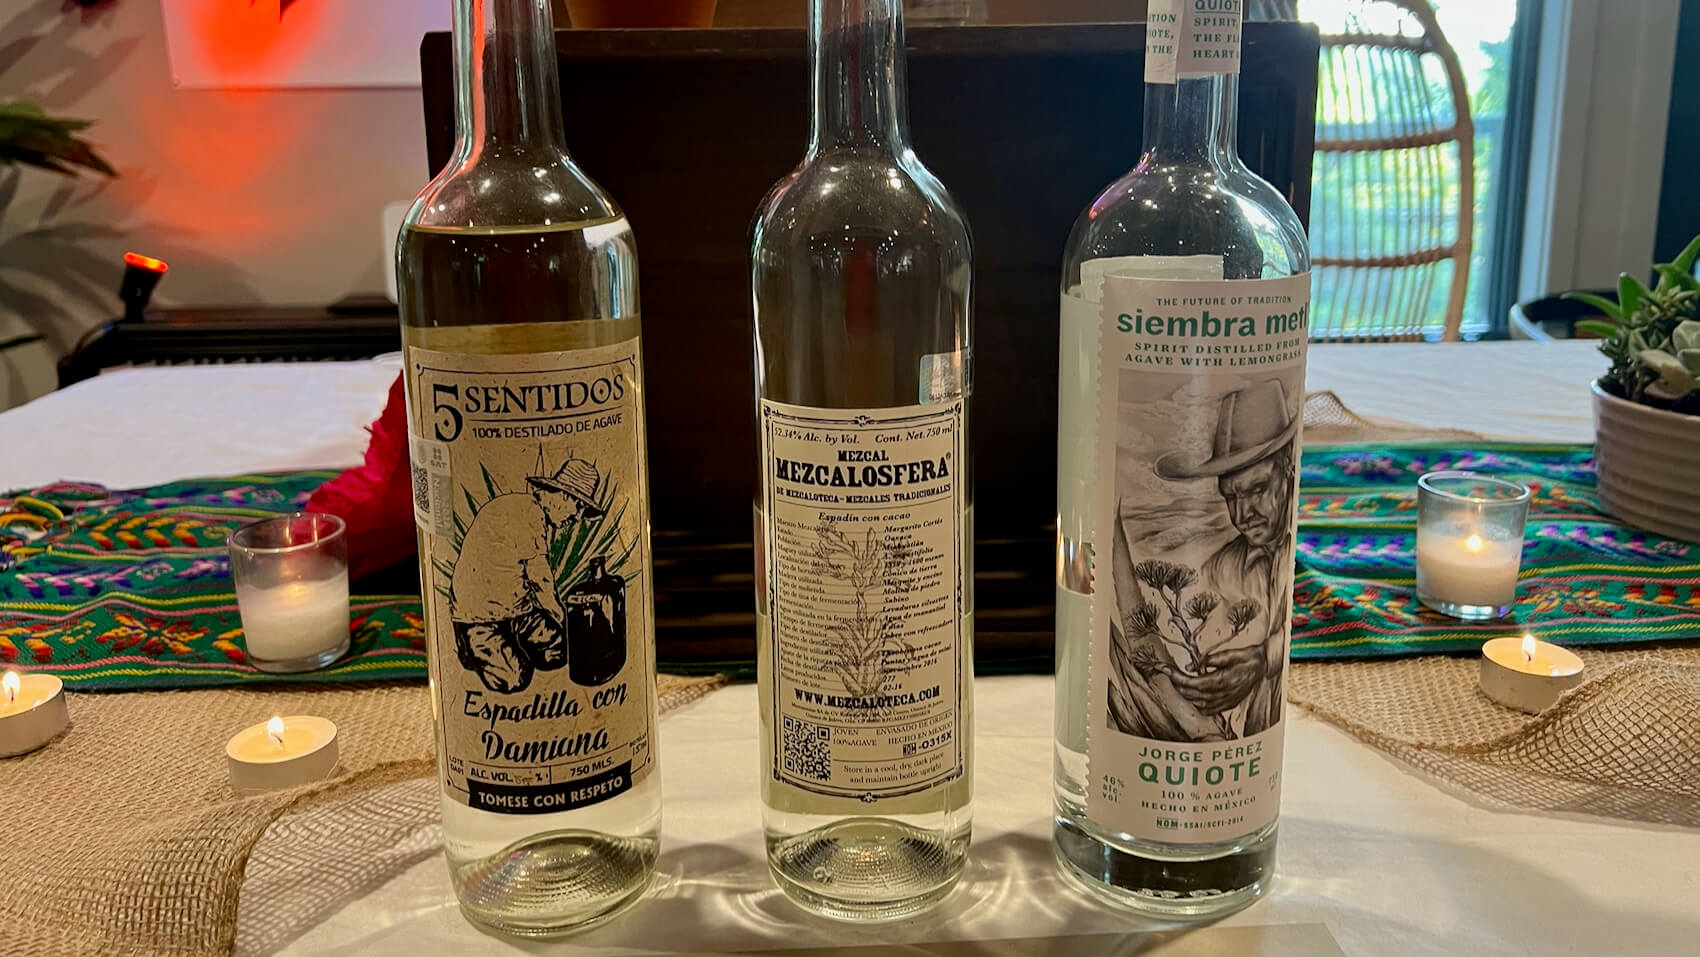 A flight of three bottles of pechuga mezcal